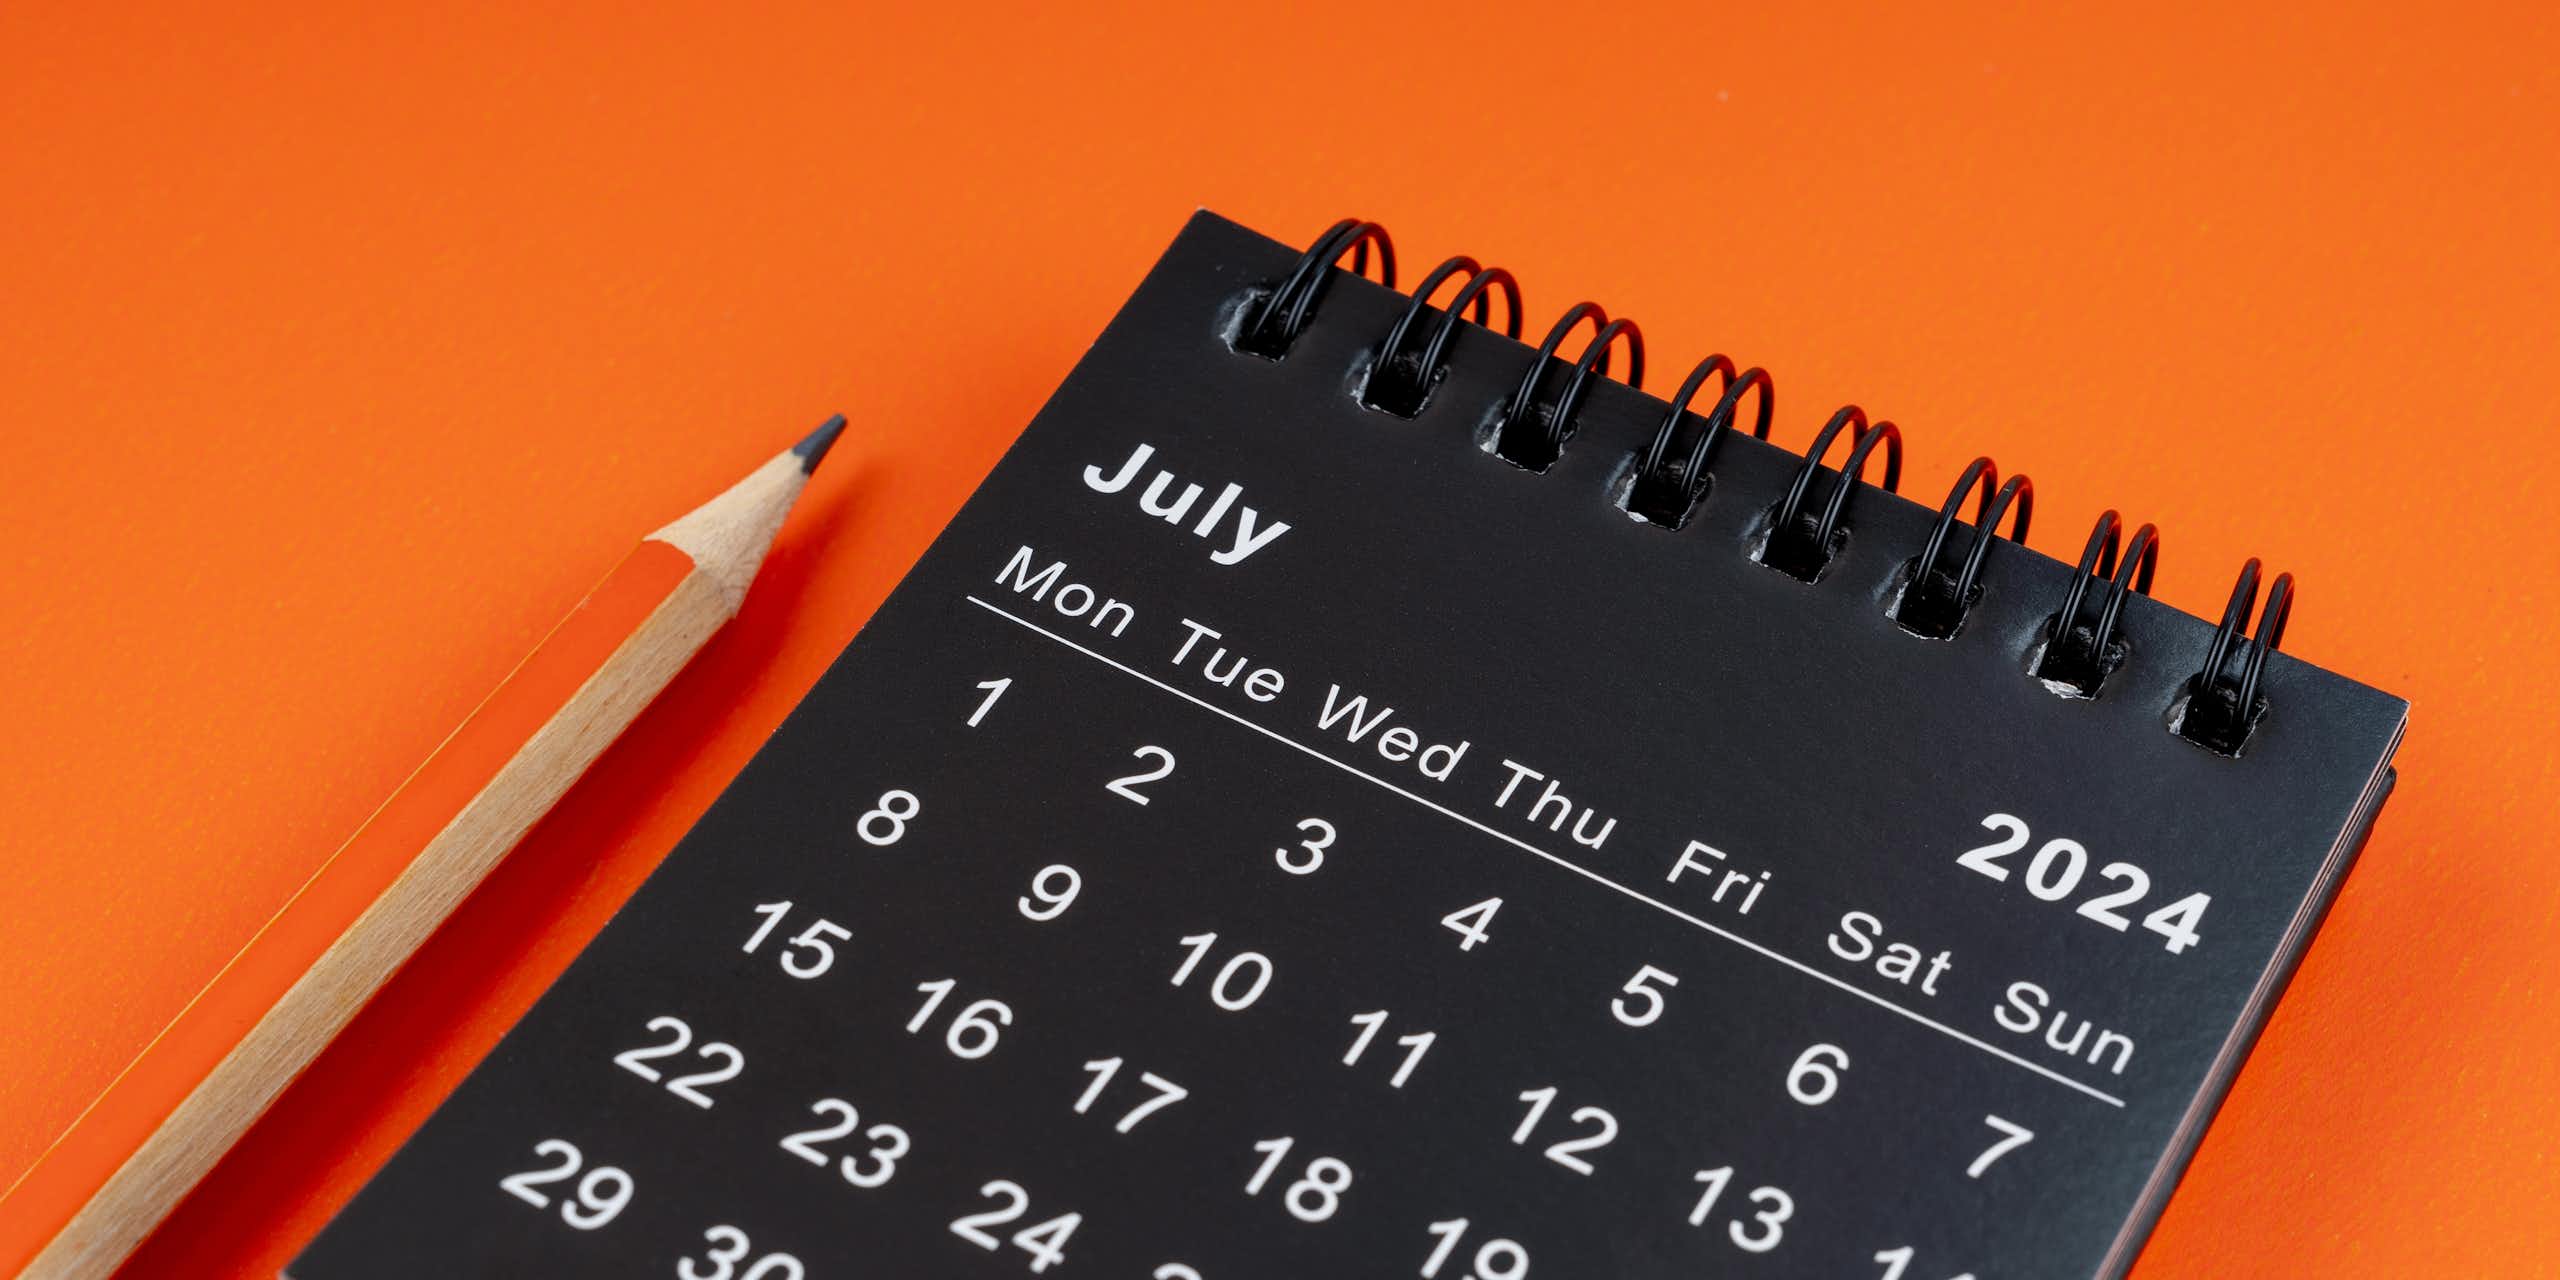 Desk calendar seen on orange background with orange pencil 